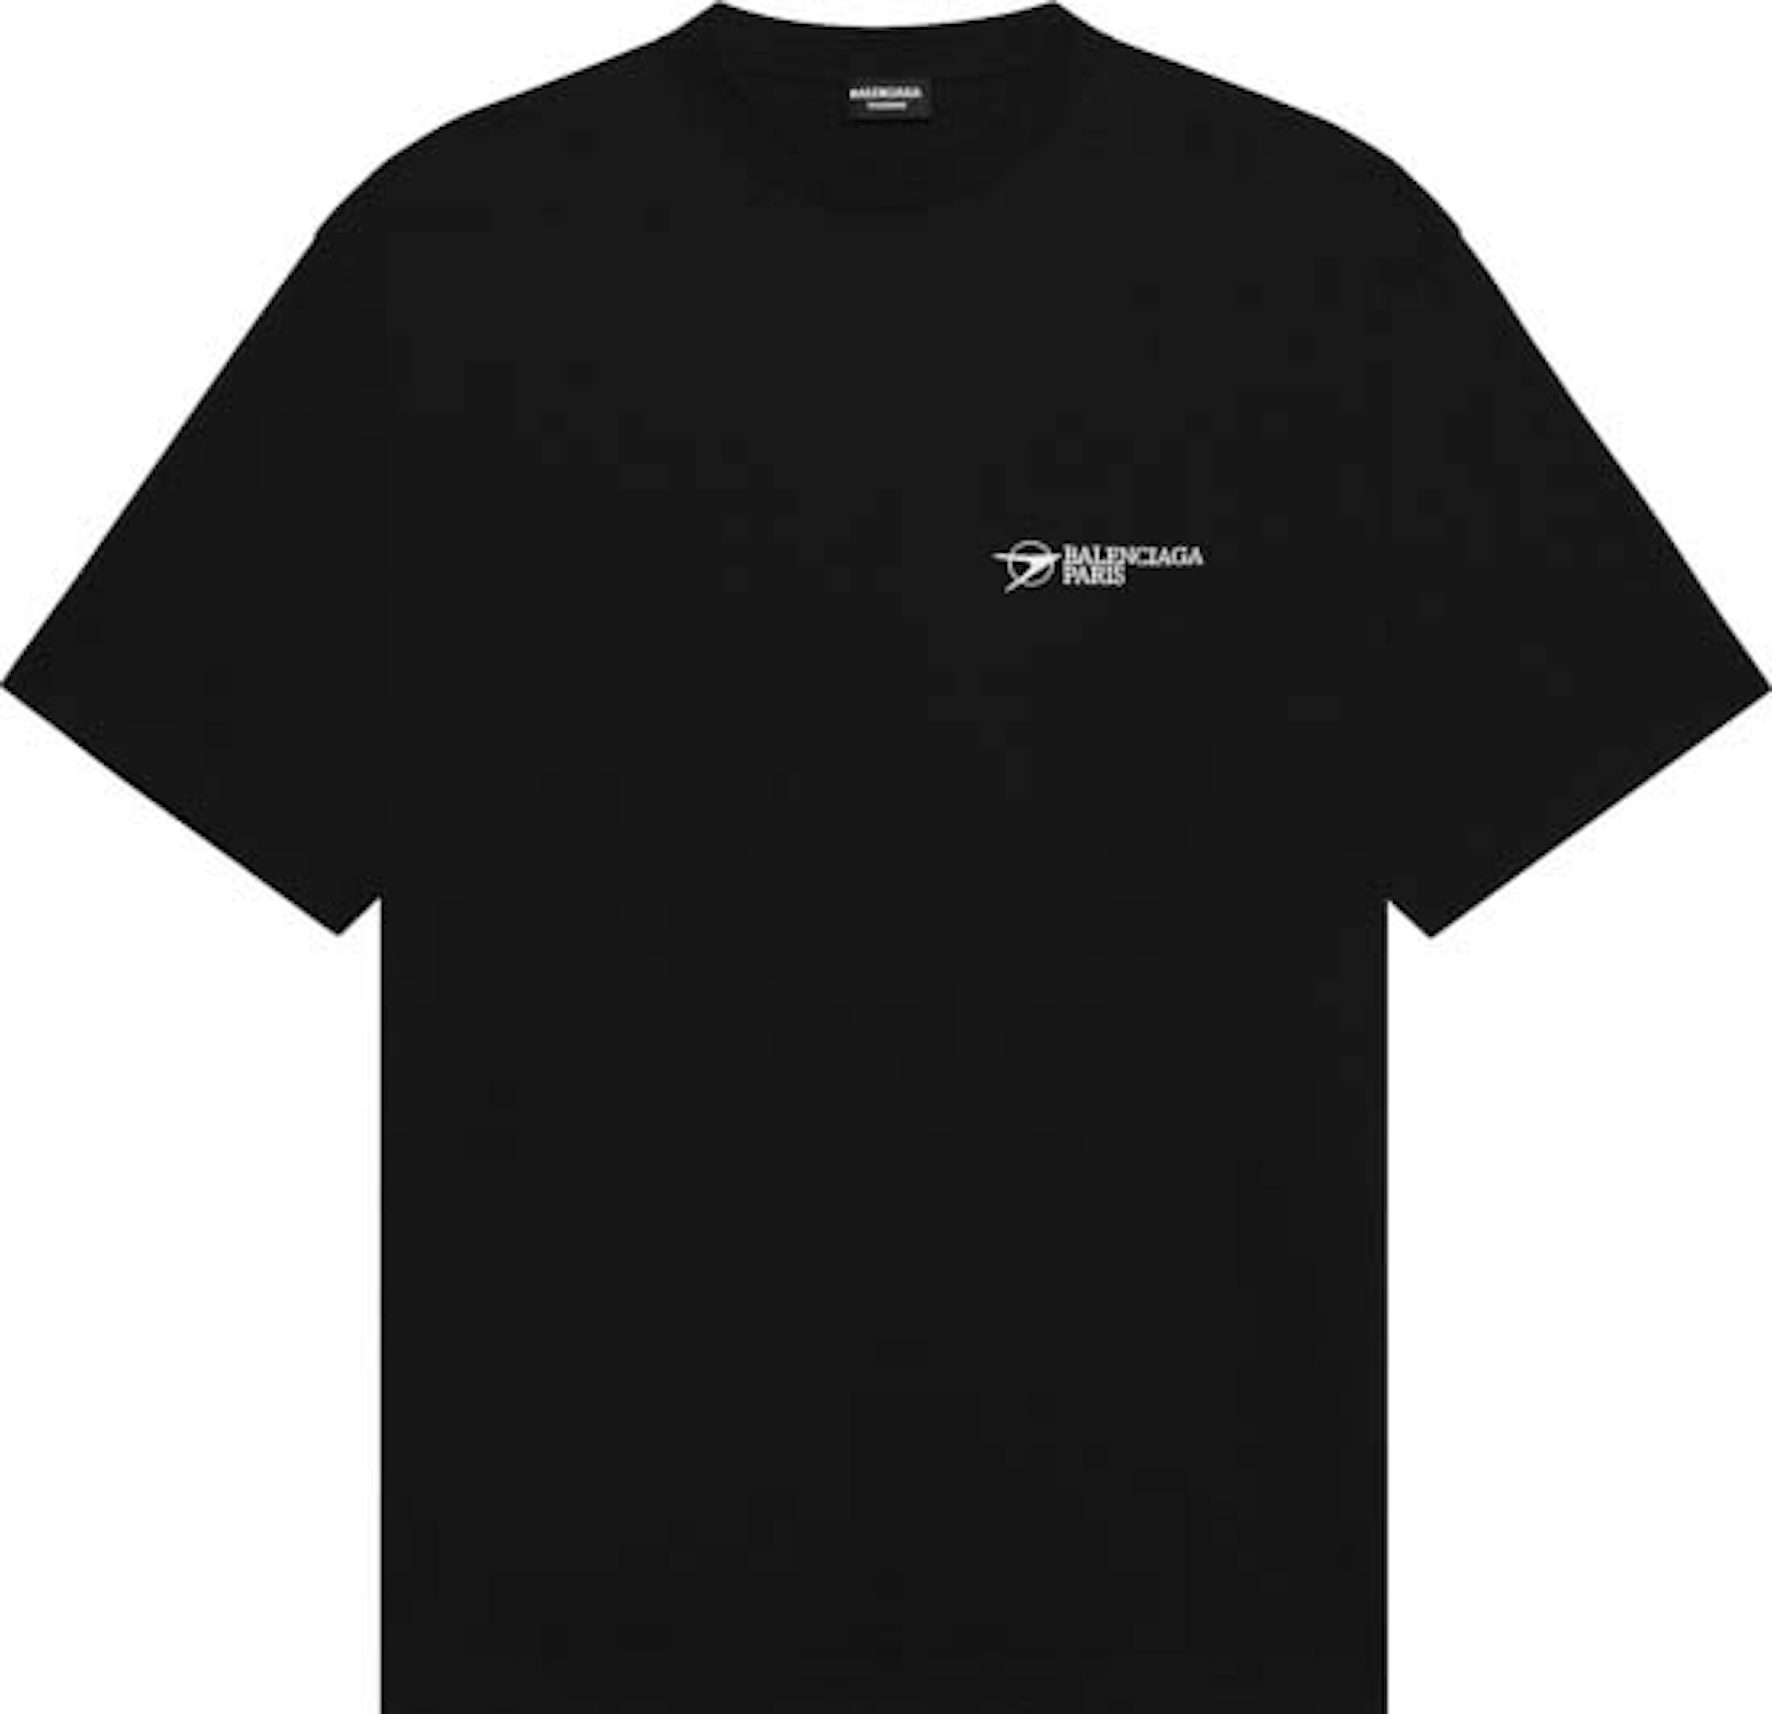 Corporate T-shirt Black Men's US